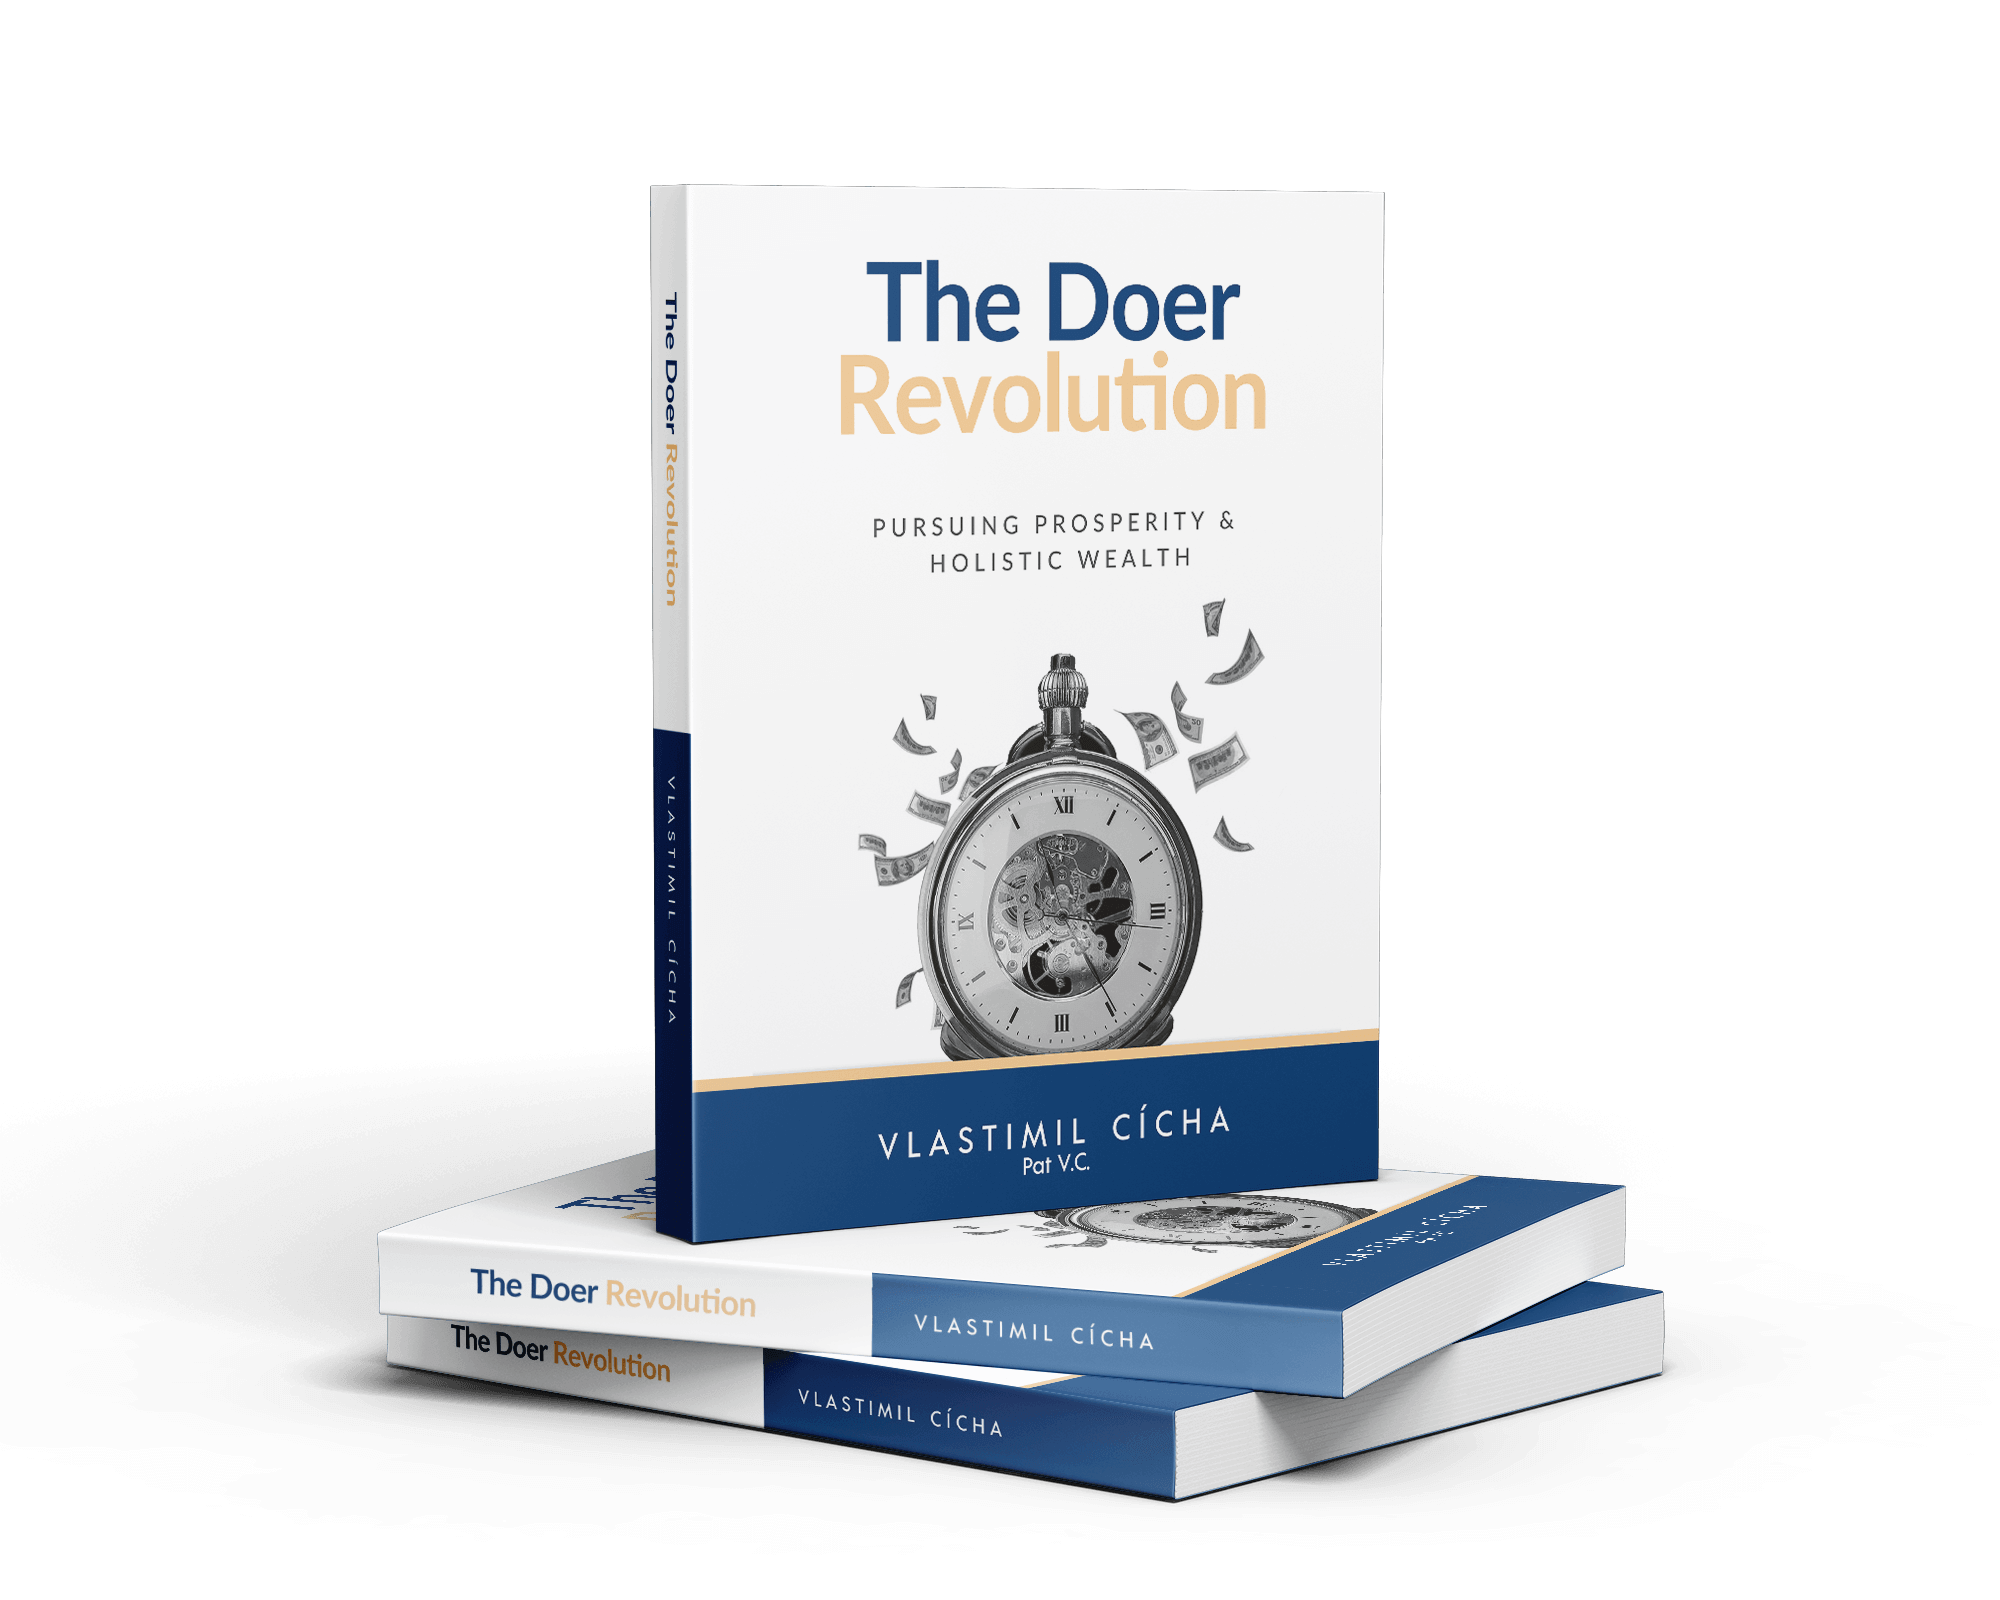 The Doer Revolution book 3 pieces